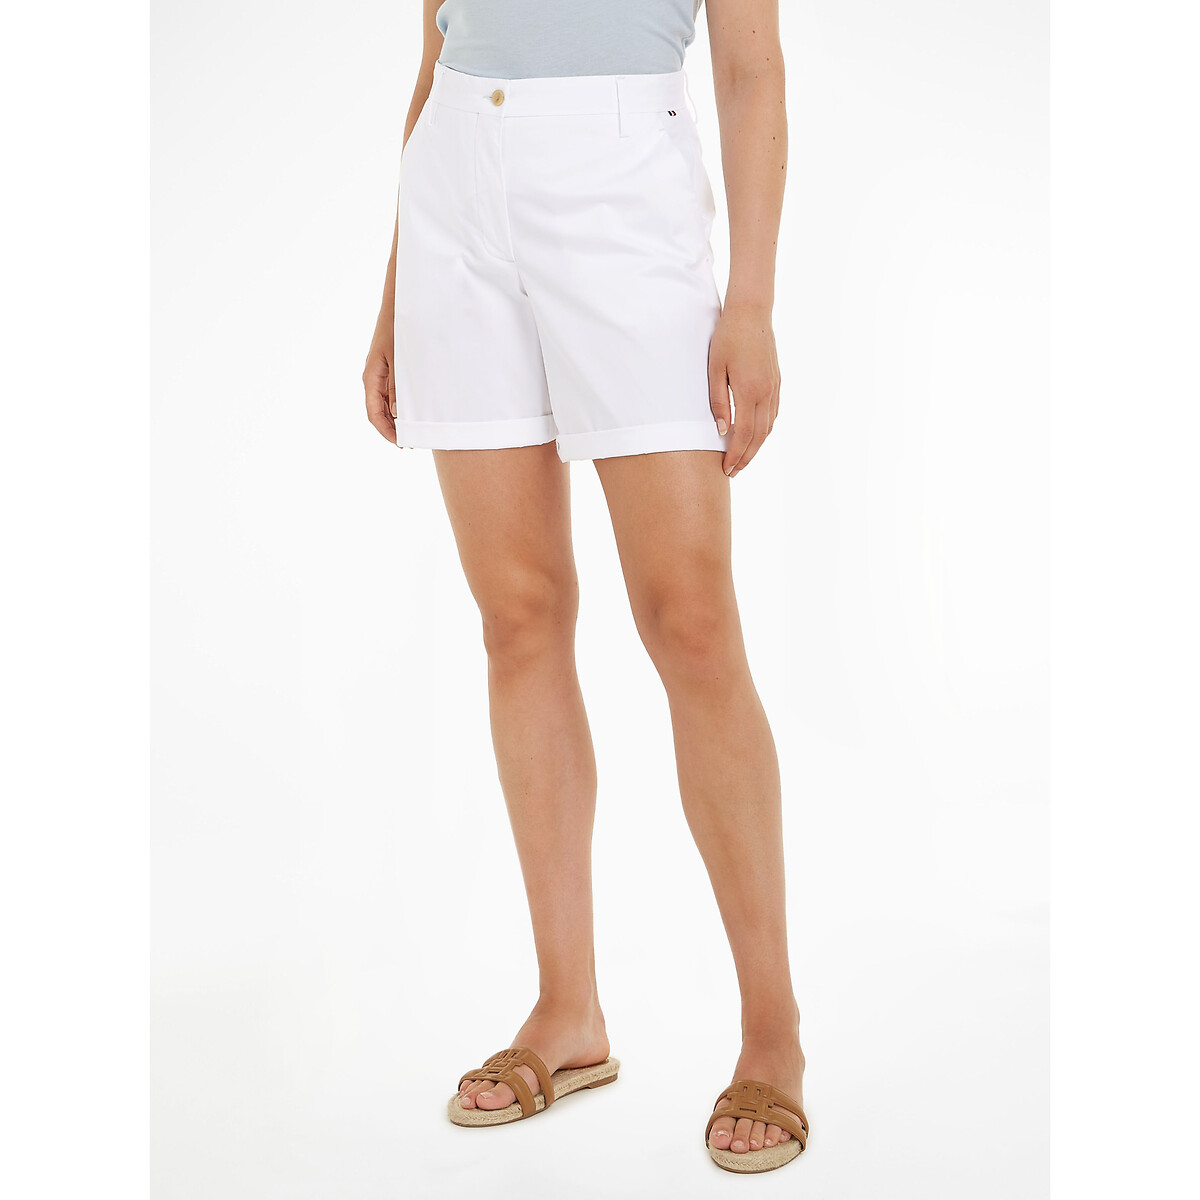 Bermuda Chino Shorts in Cotton Mix